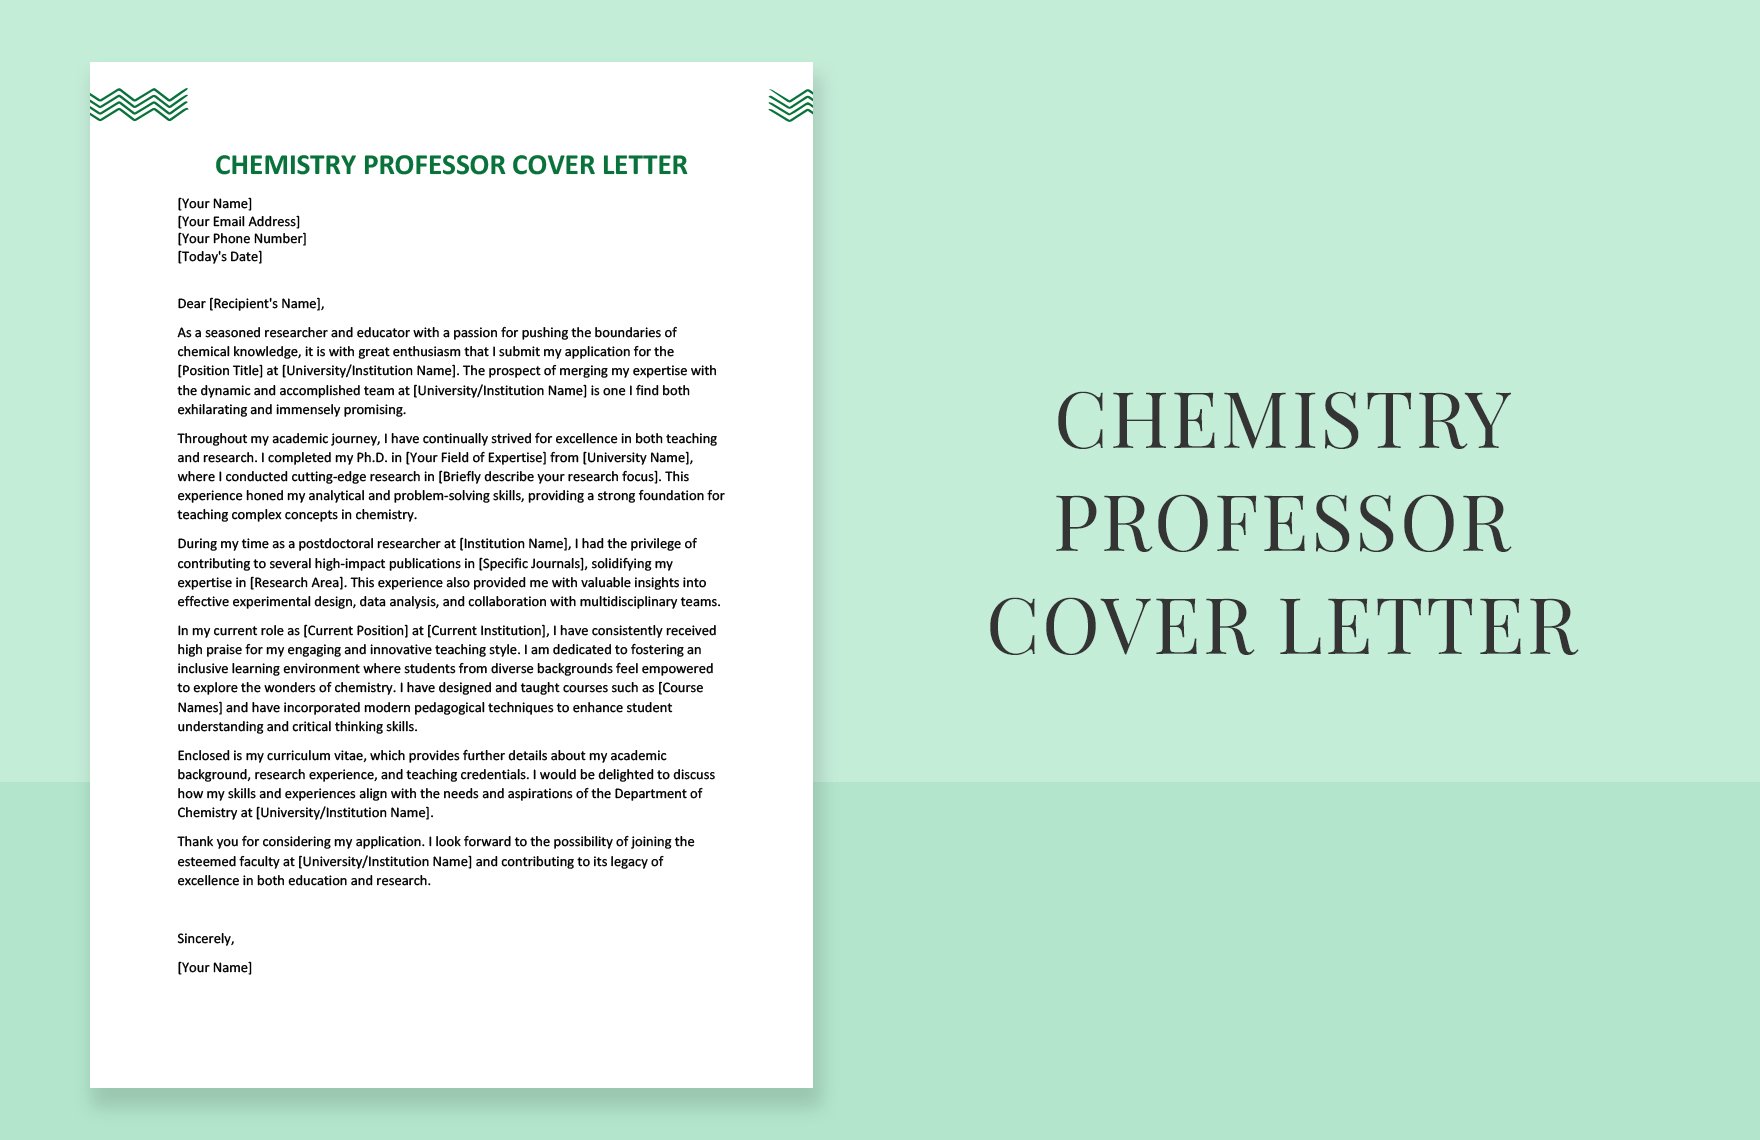 Chemistry Professor Cover Letter in Word, Google Docs